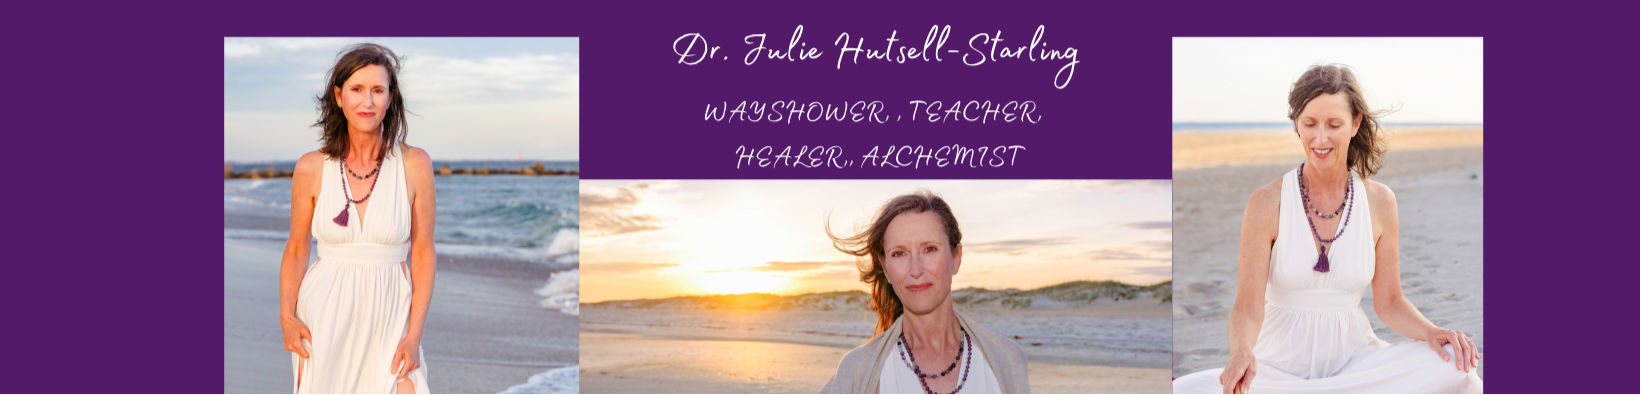 Dr. Julie Hutsell-Starling